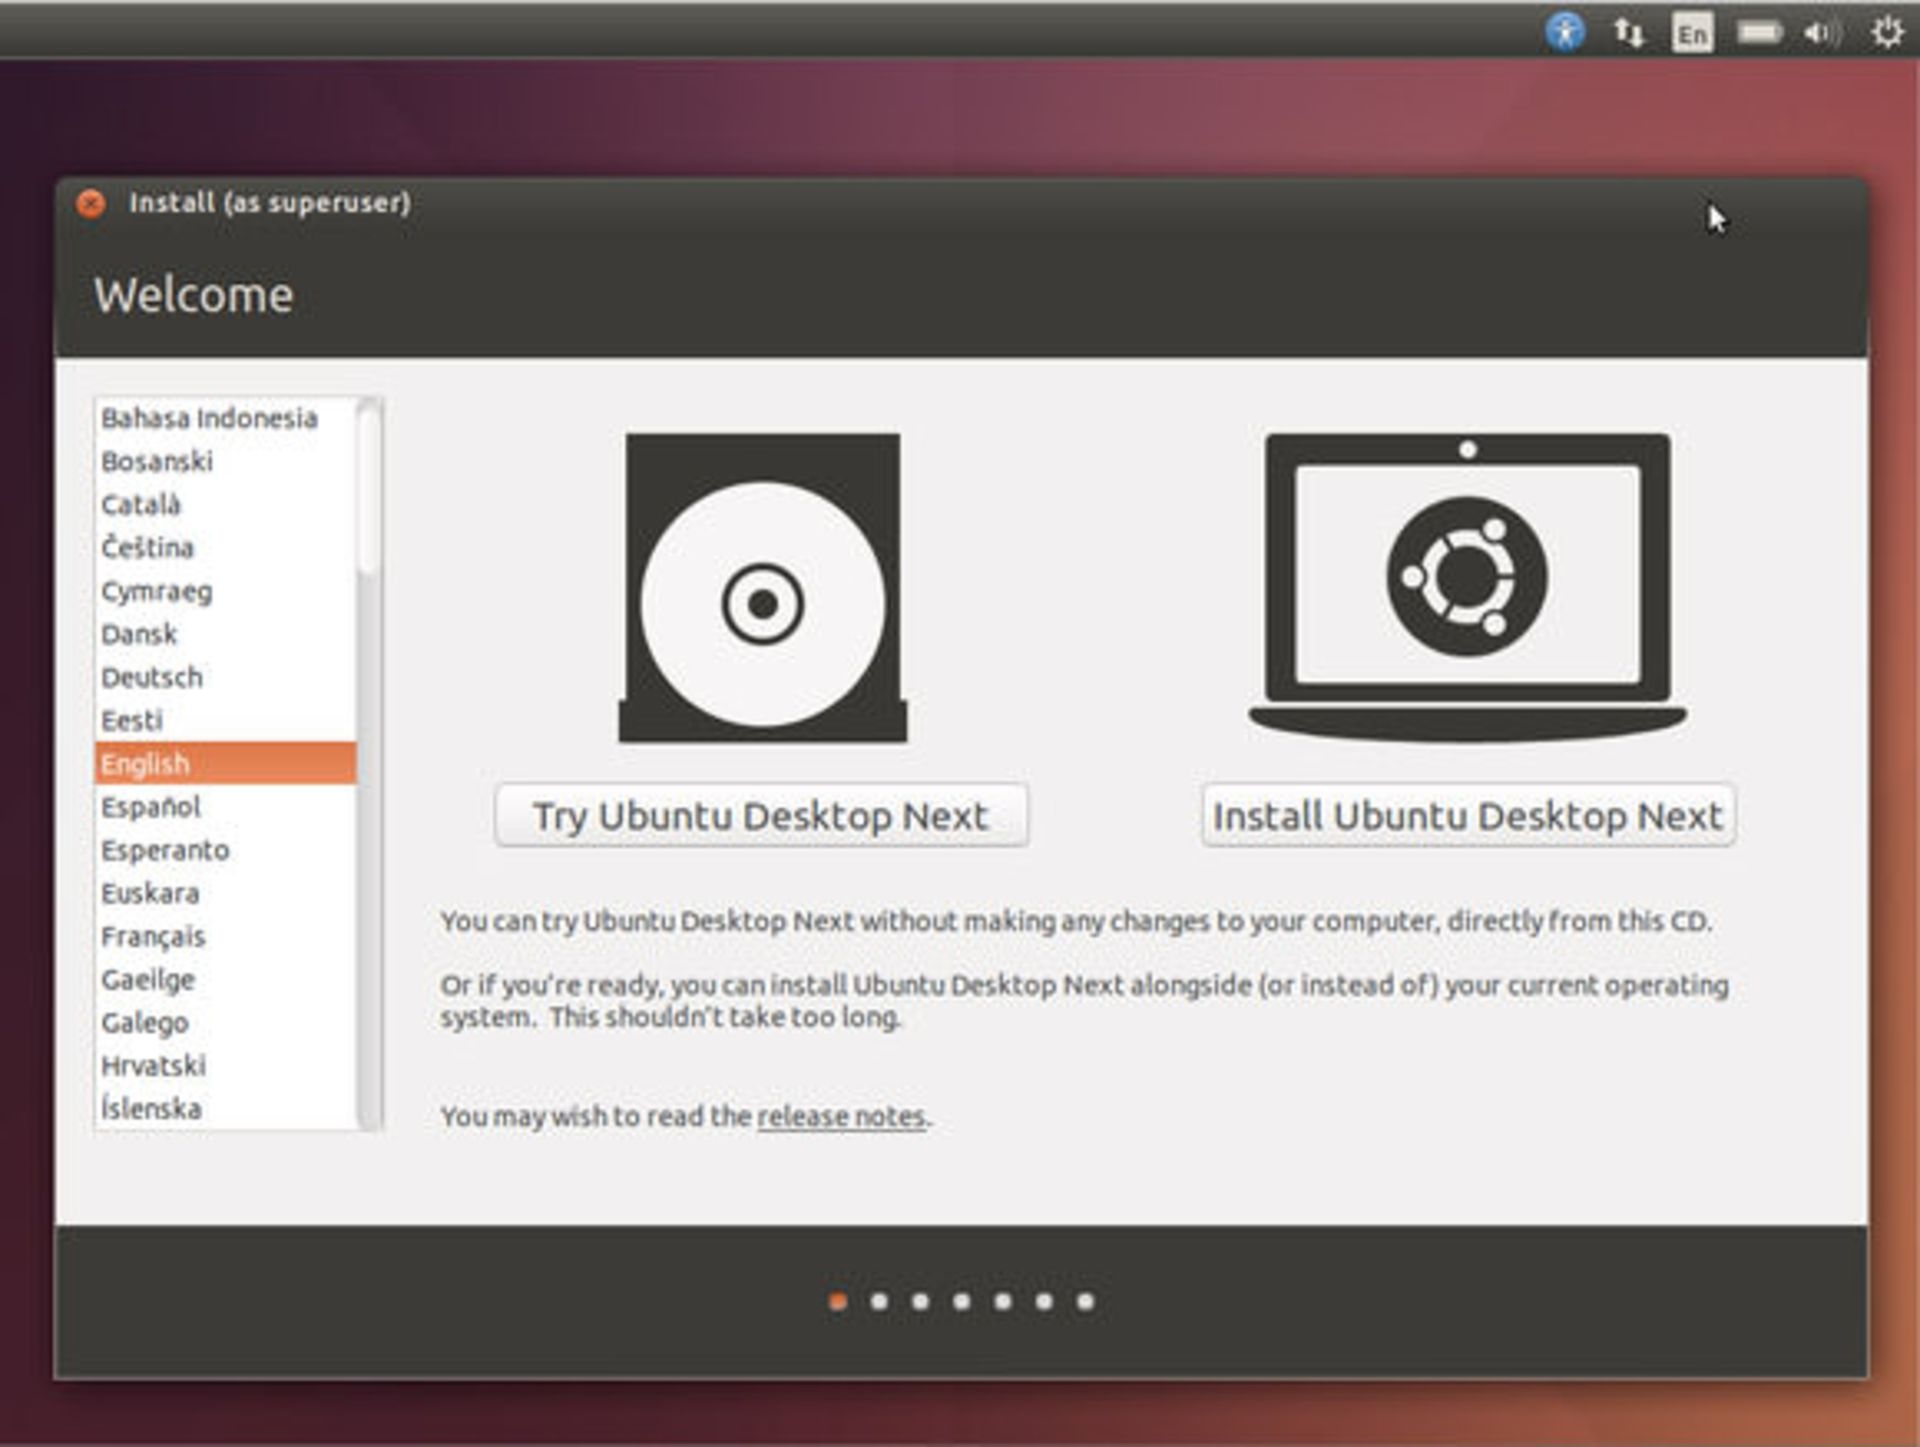 ubuntu-desktop-next-installer-100526256-large